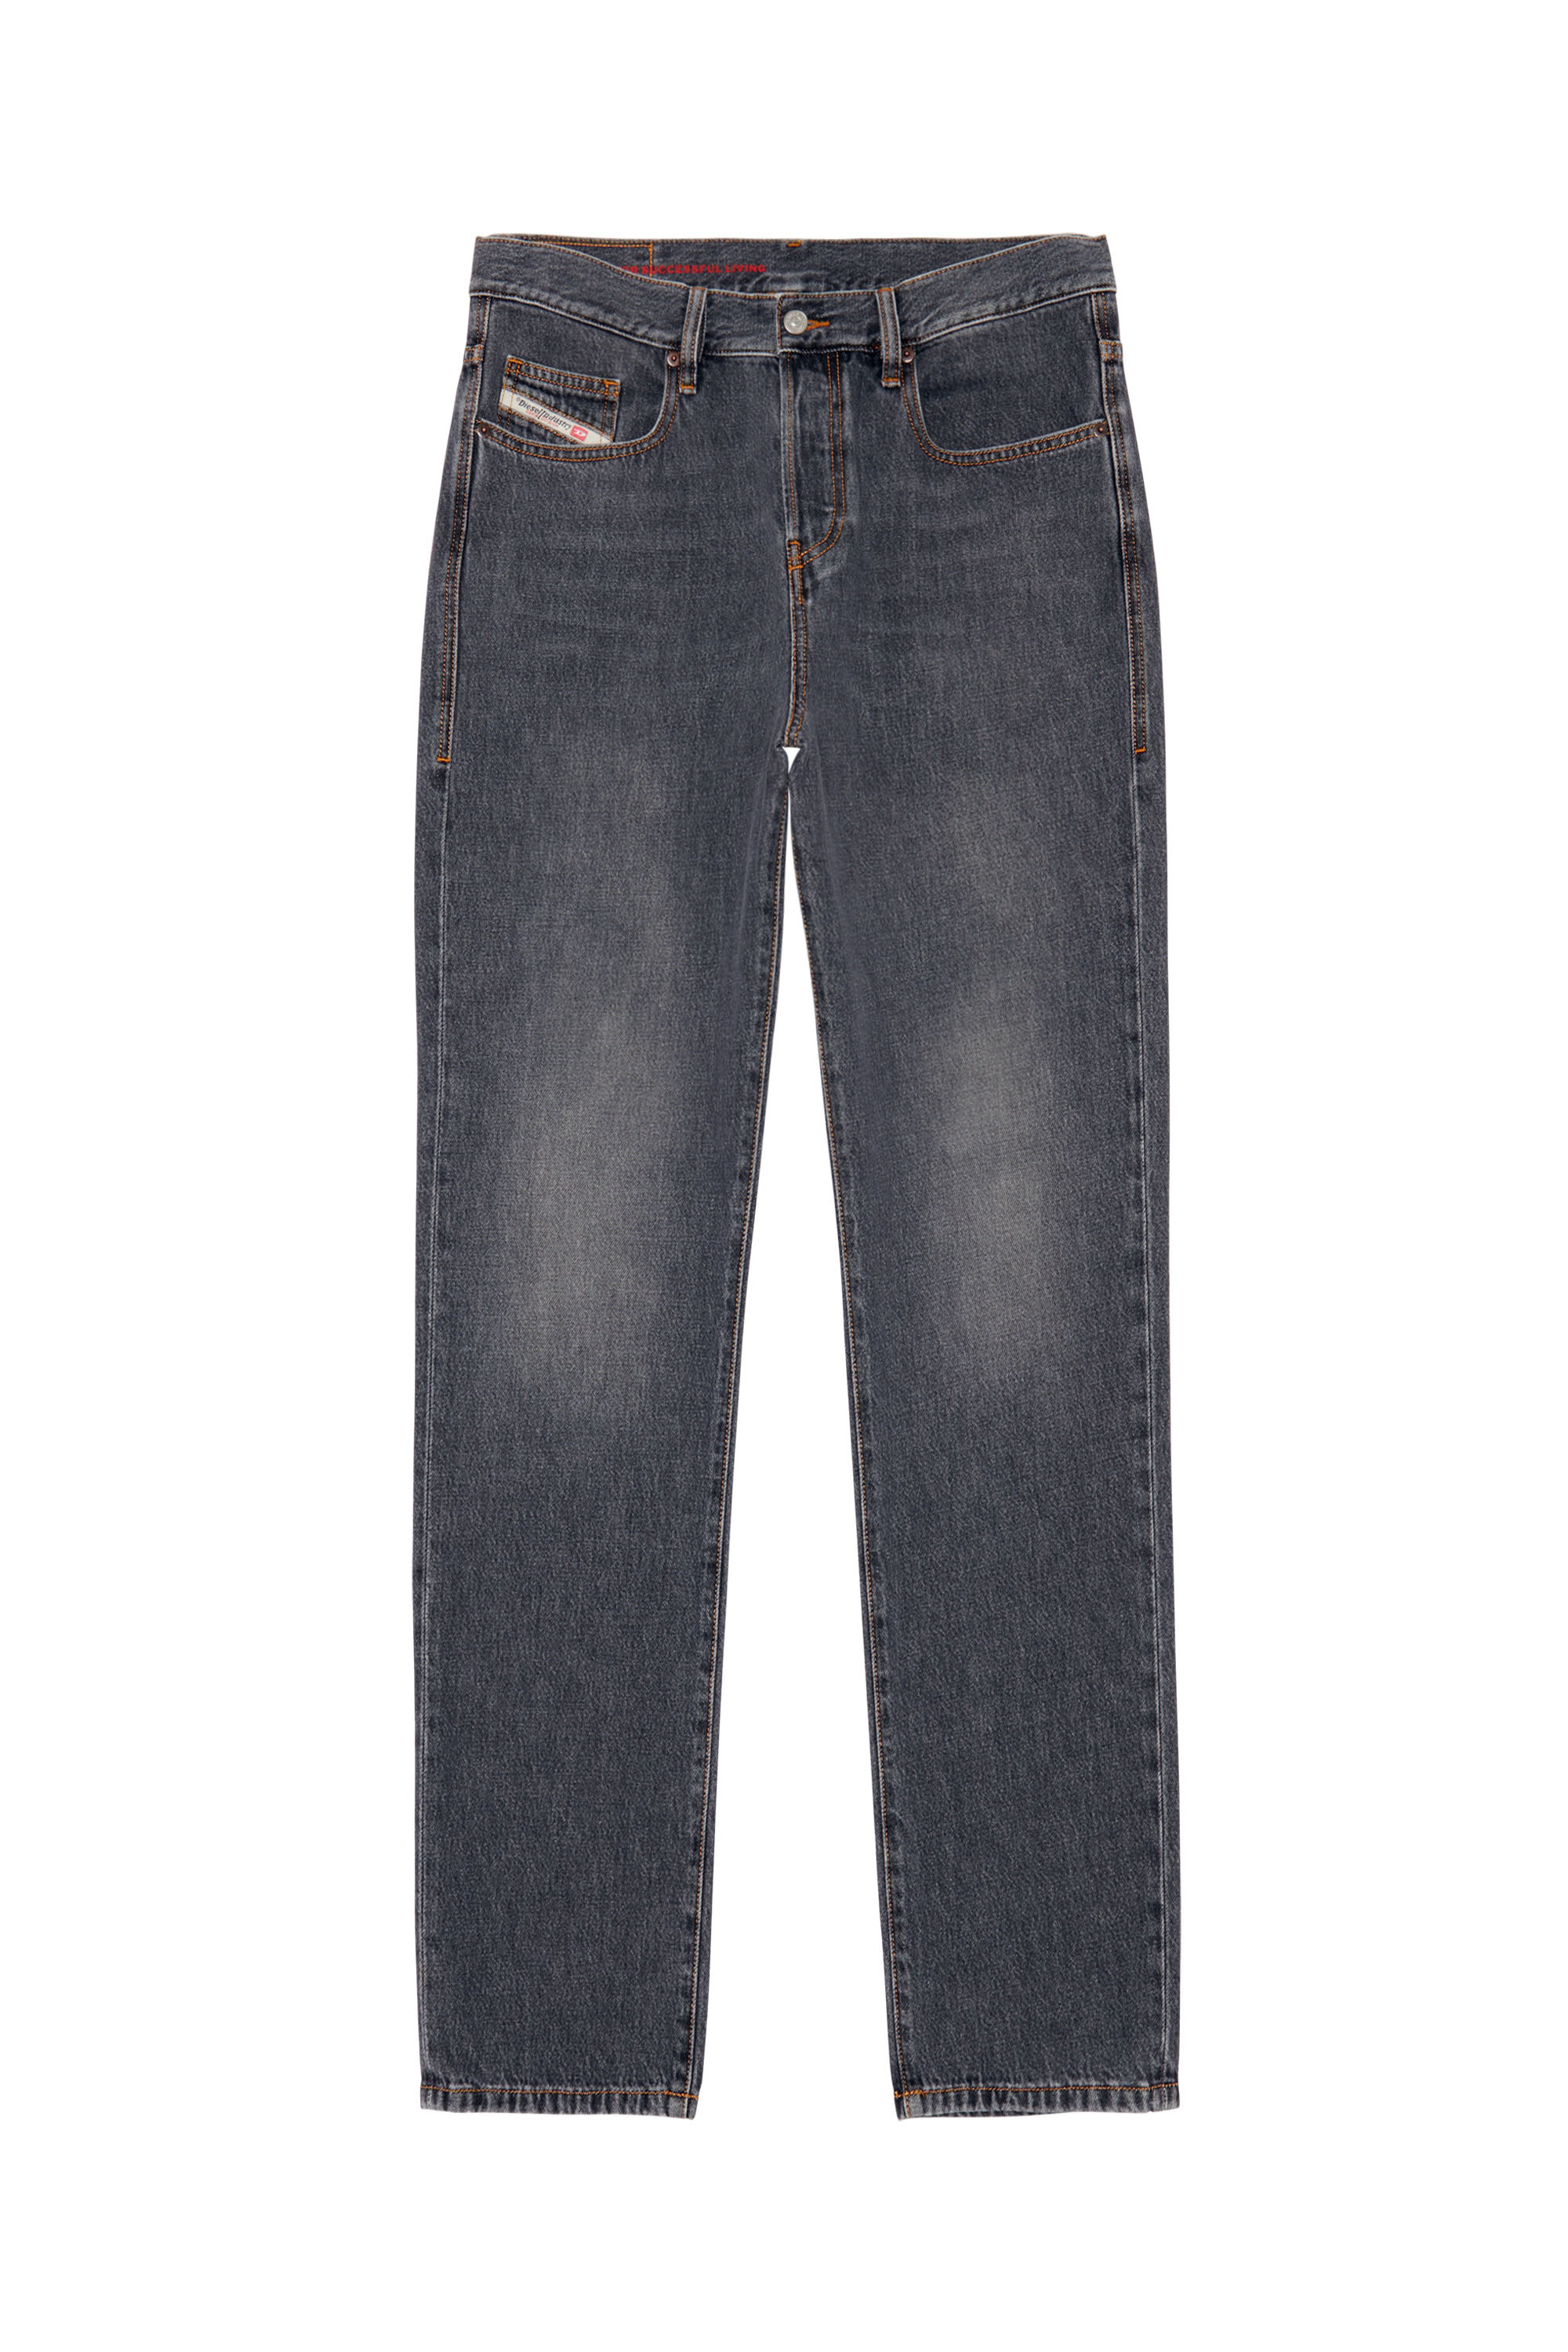 2020 D-VIKER 09B88 Straight Jeans, Schwarz/Dunkelgrau - Jeans